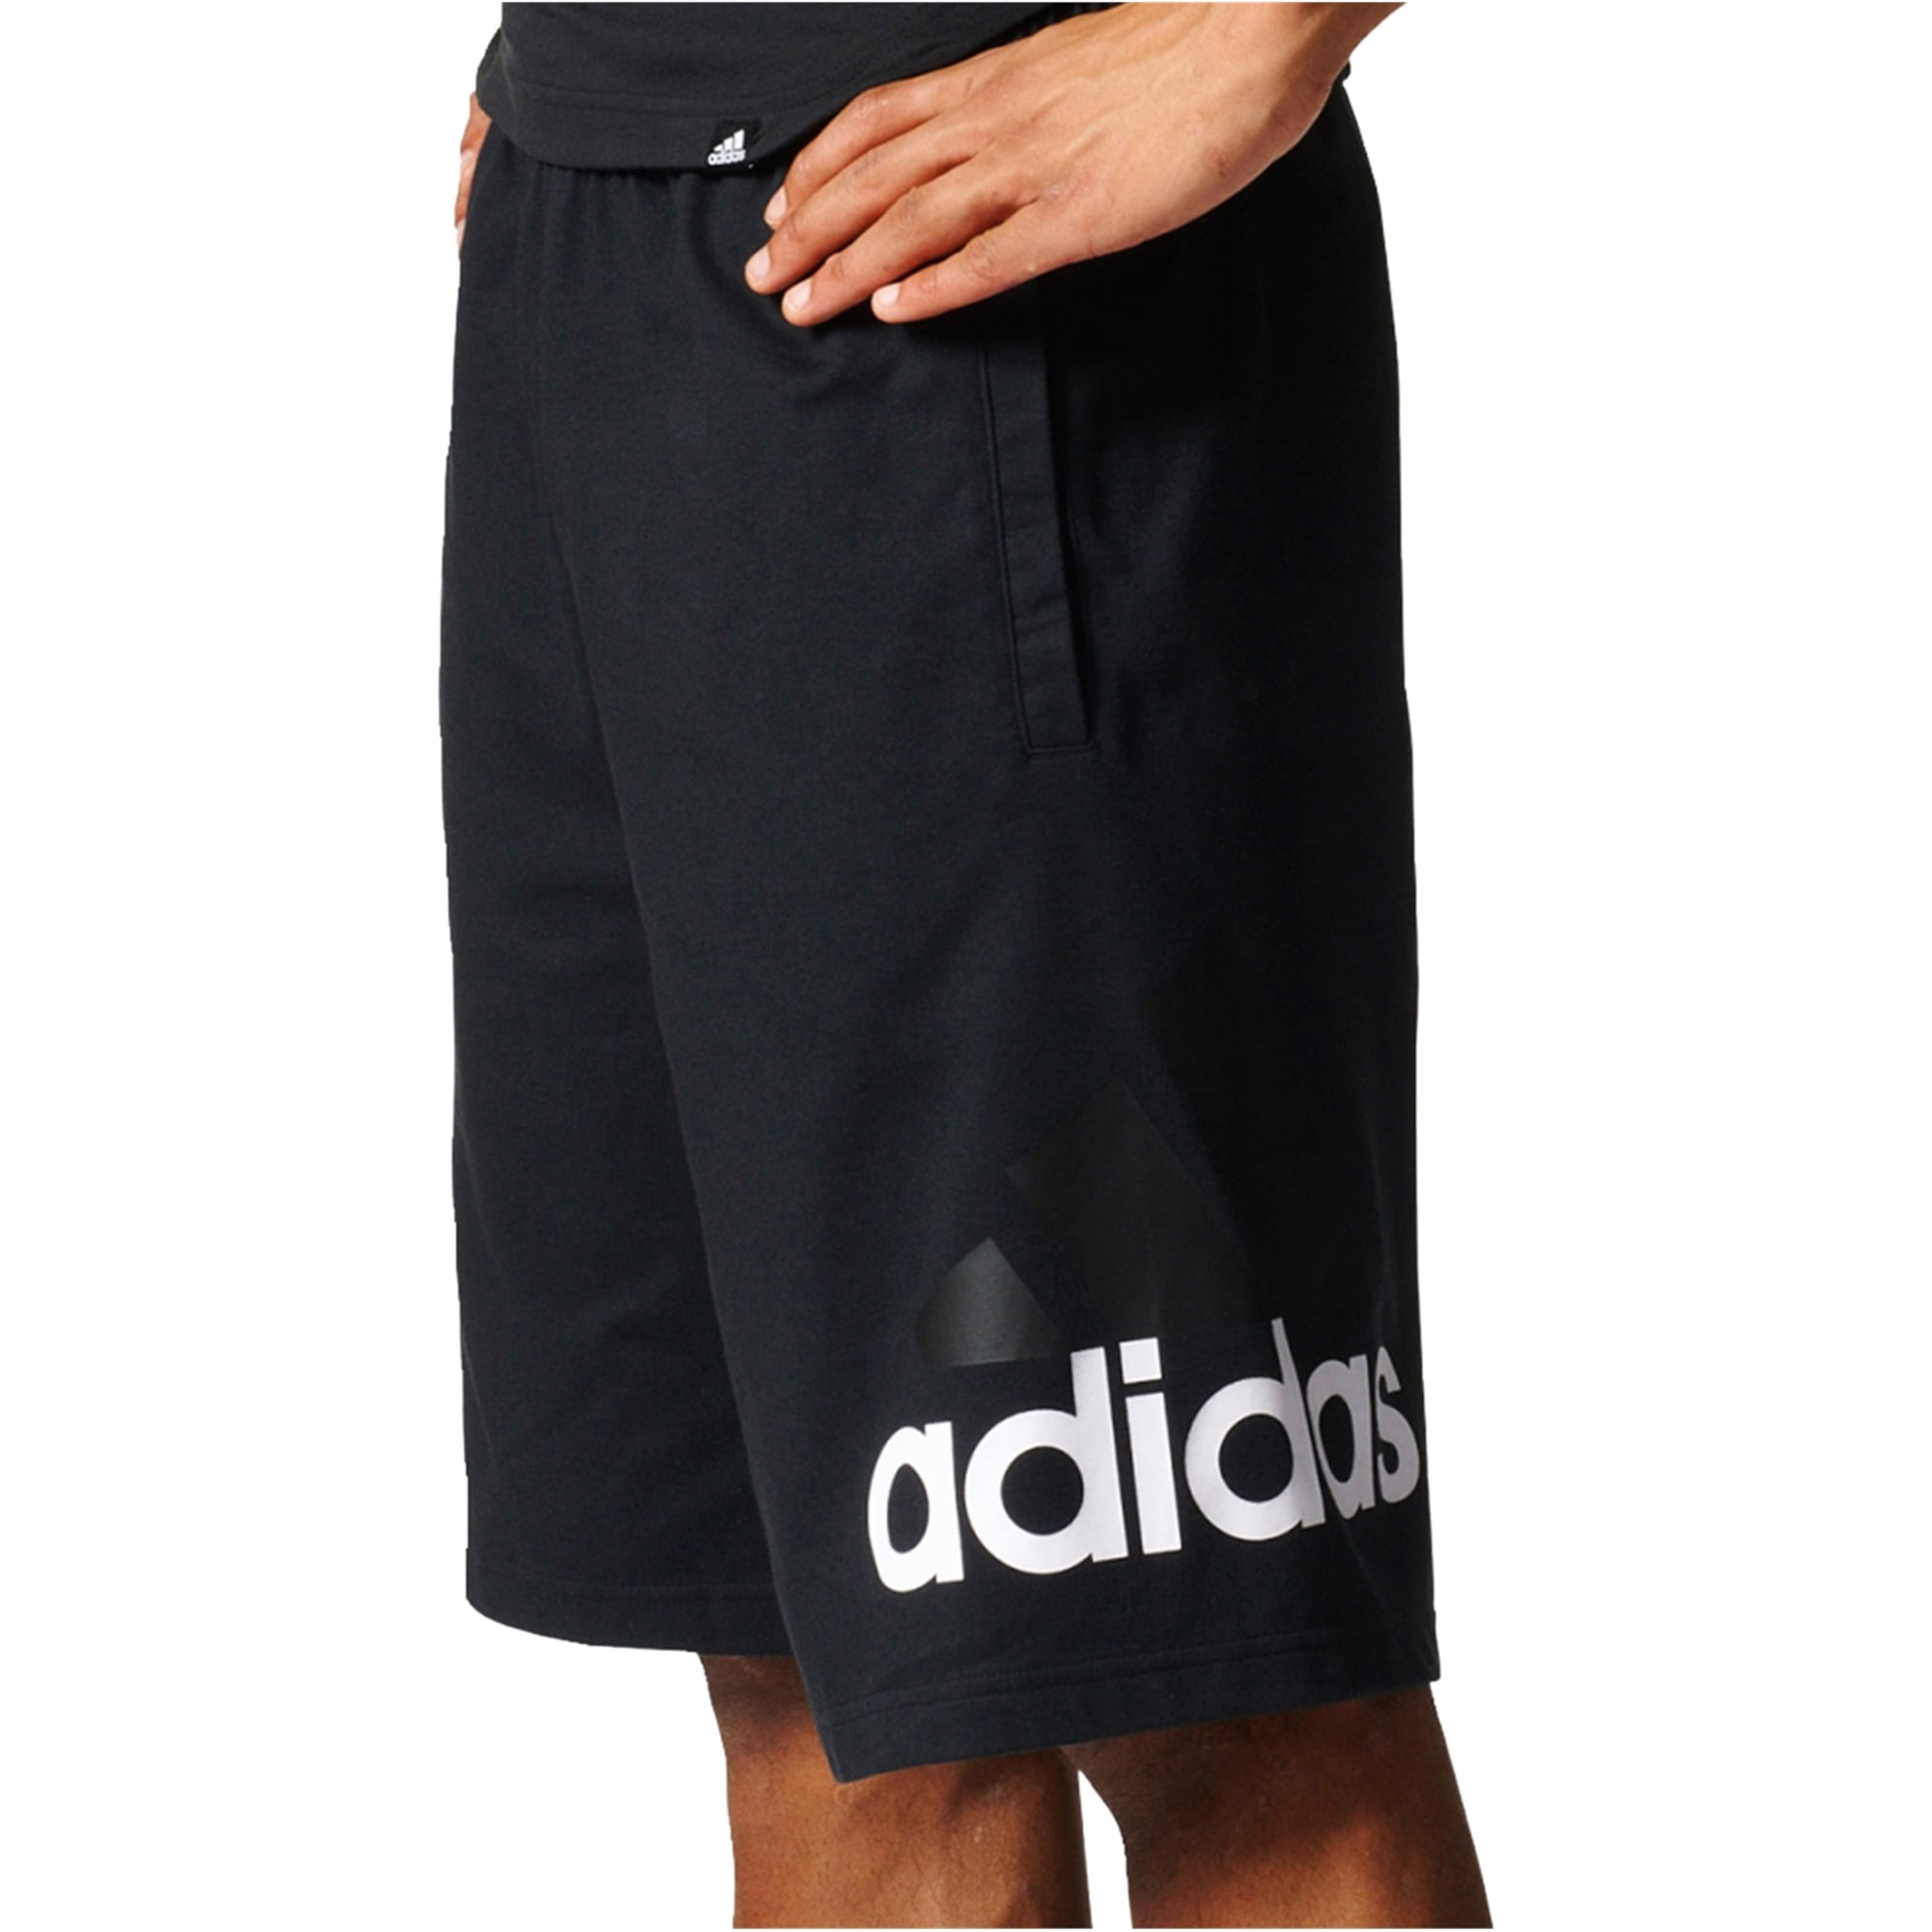 Adidas - Adidas Mens Jersey Athletic Workout Shorts - Walmart.com